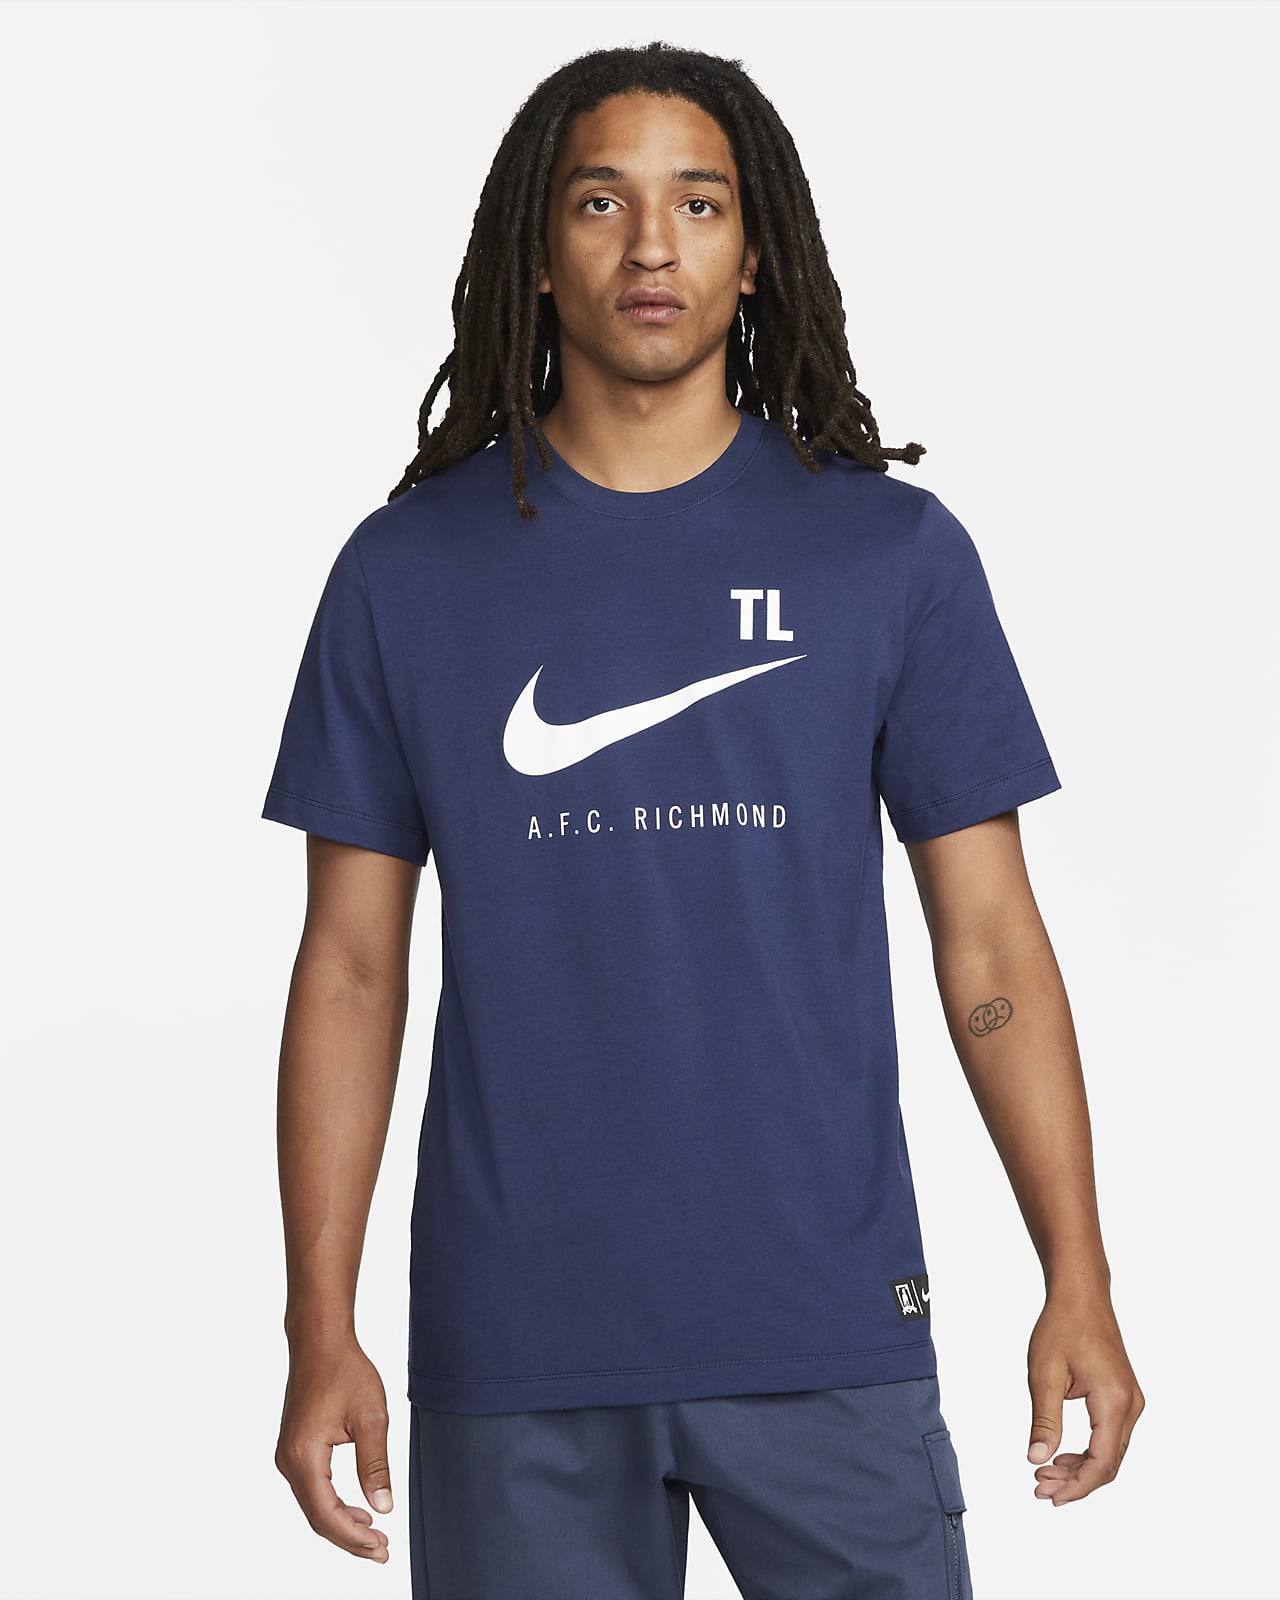 AFC Richmond Men's T-Shirt. Nike.com